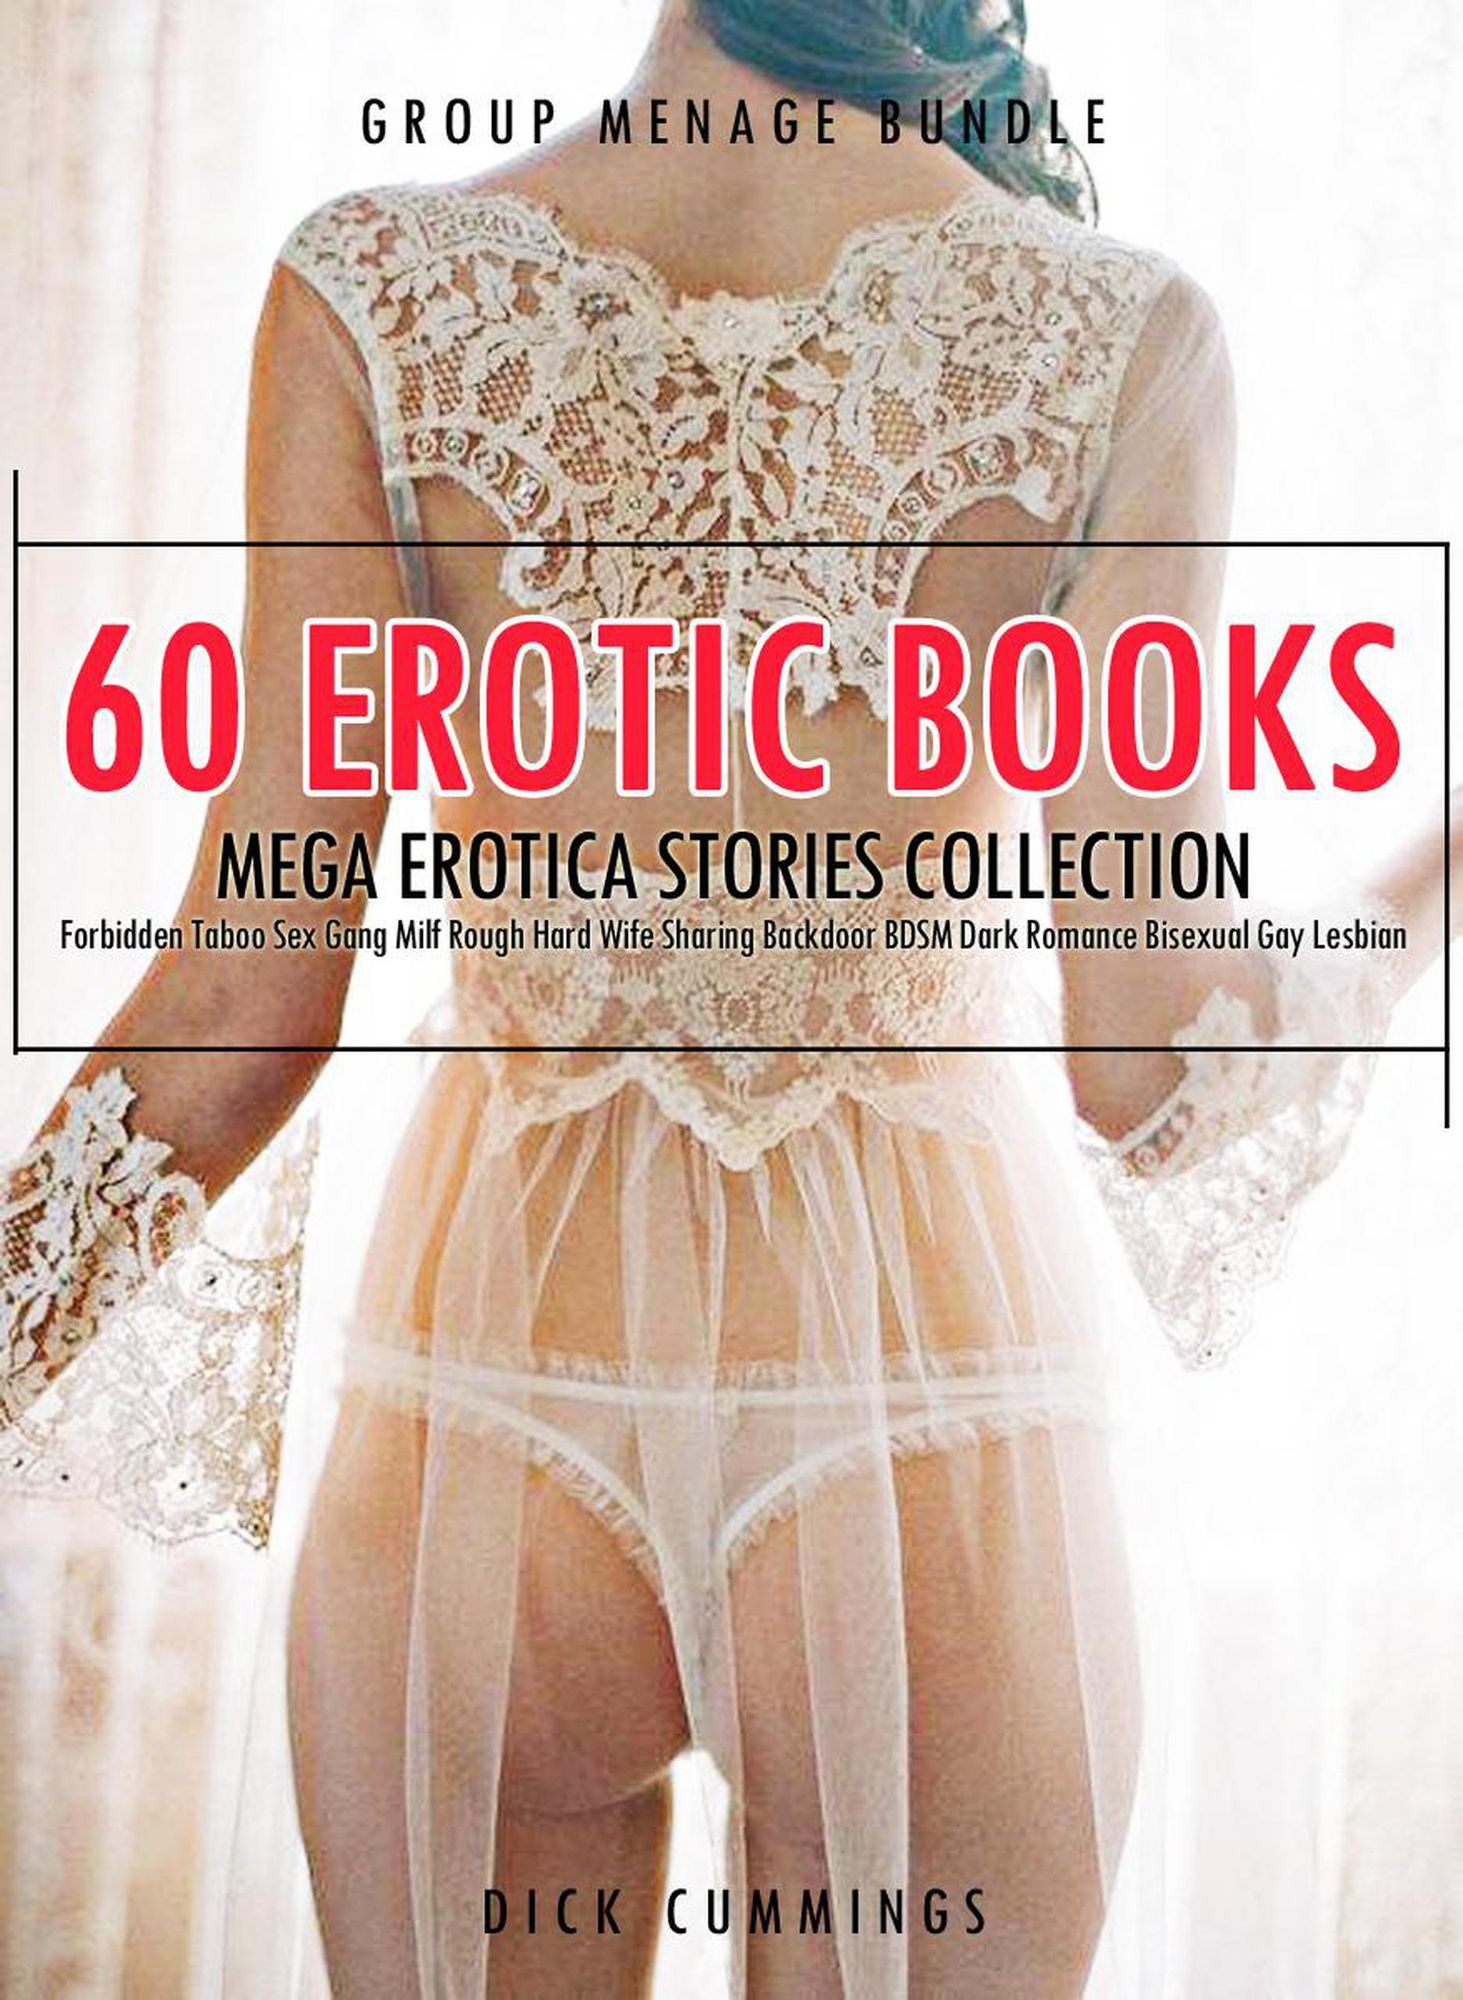 60 Erotic Books Mega Erotica Stories Collection- Forbidden Taboo Sex Gang Milf Rough Hard Wife Sharing Backdoor BDSM Dark Romance Bisexual Gay Lesbian von Dick Cummings